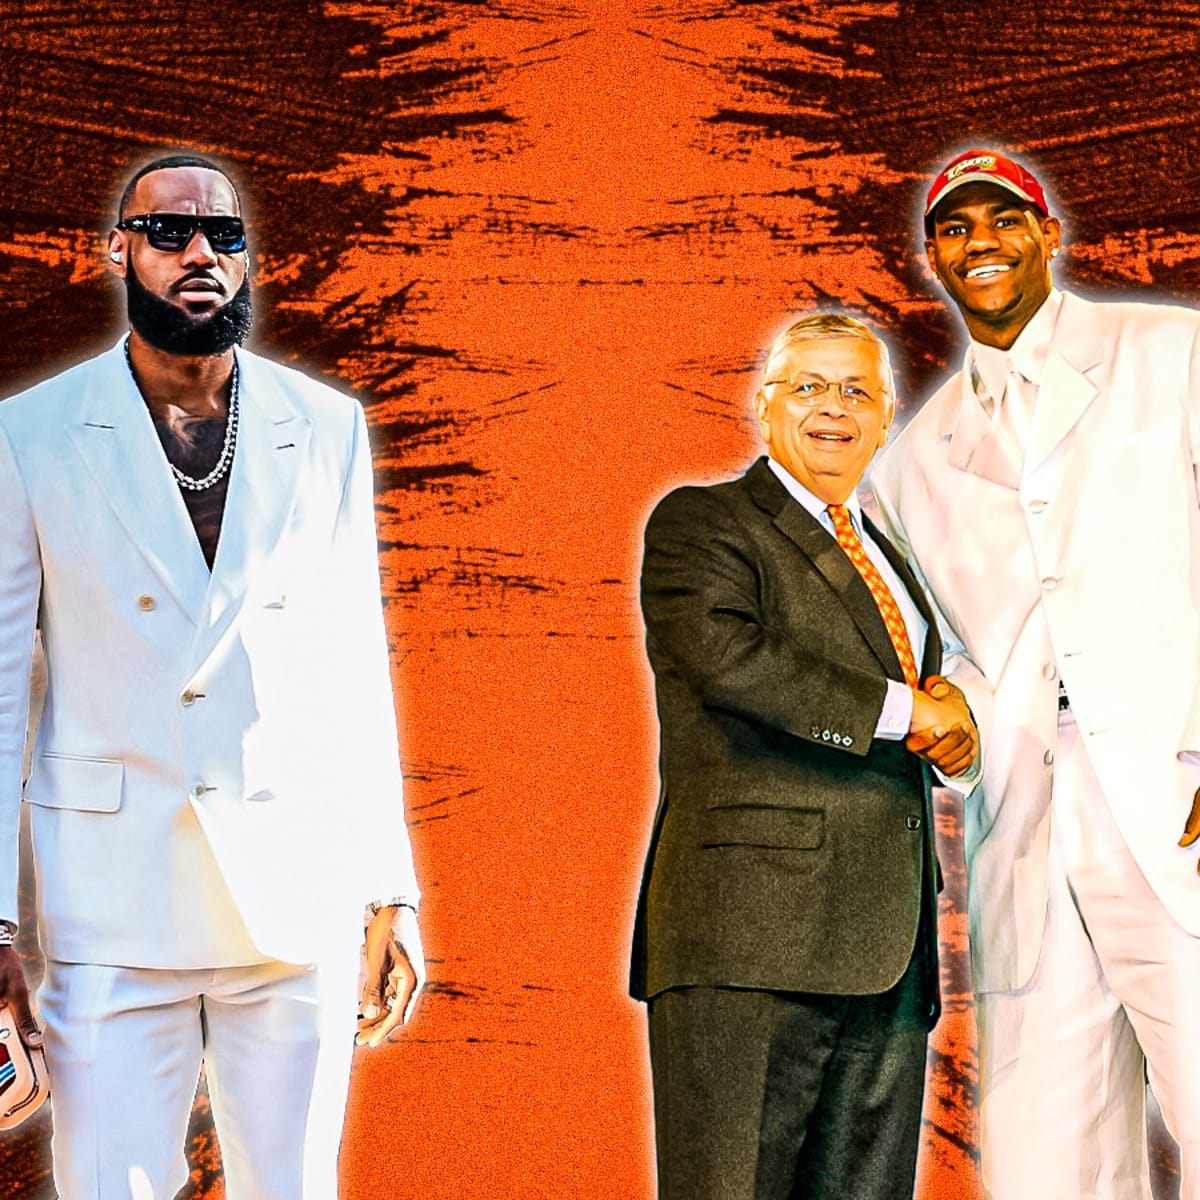 LeBron James' Takeoff tribute tops NBA fashion in November - 6abc  Philadelphia